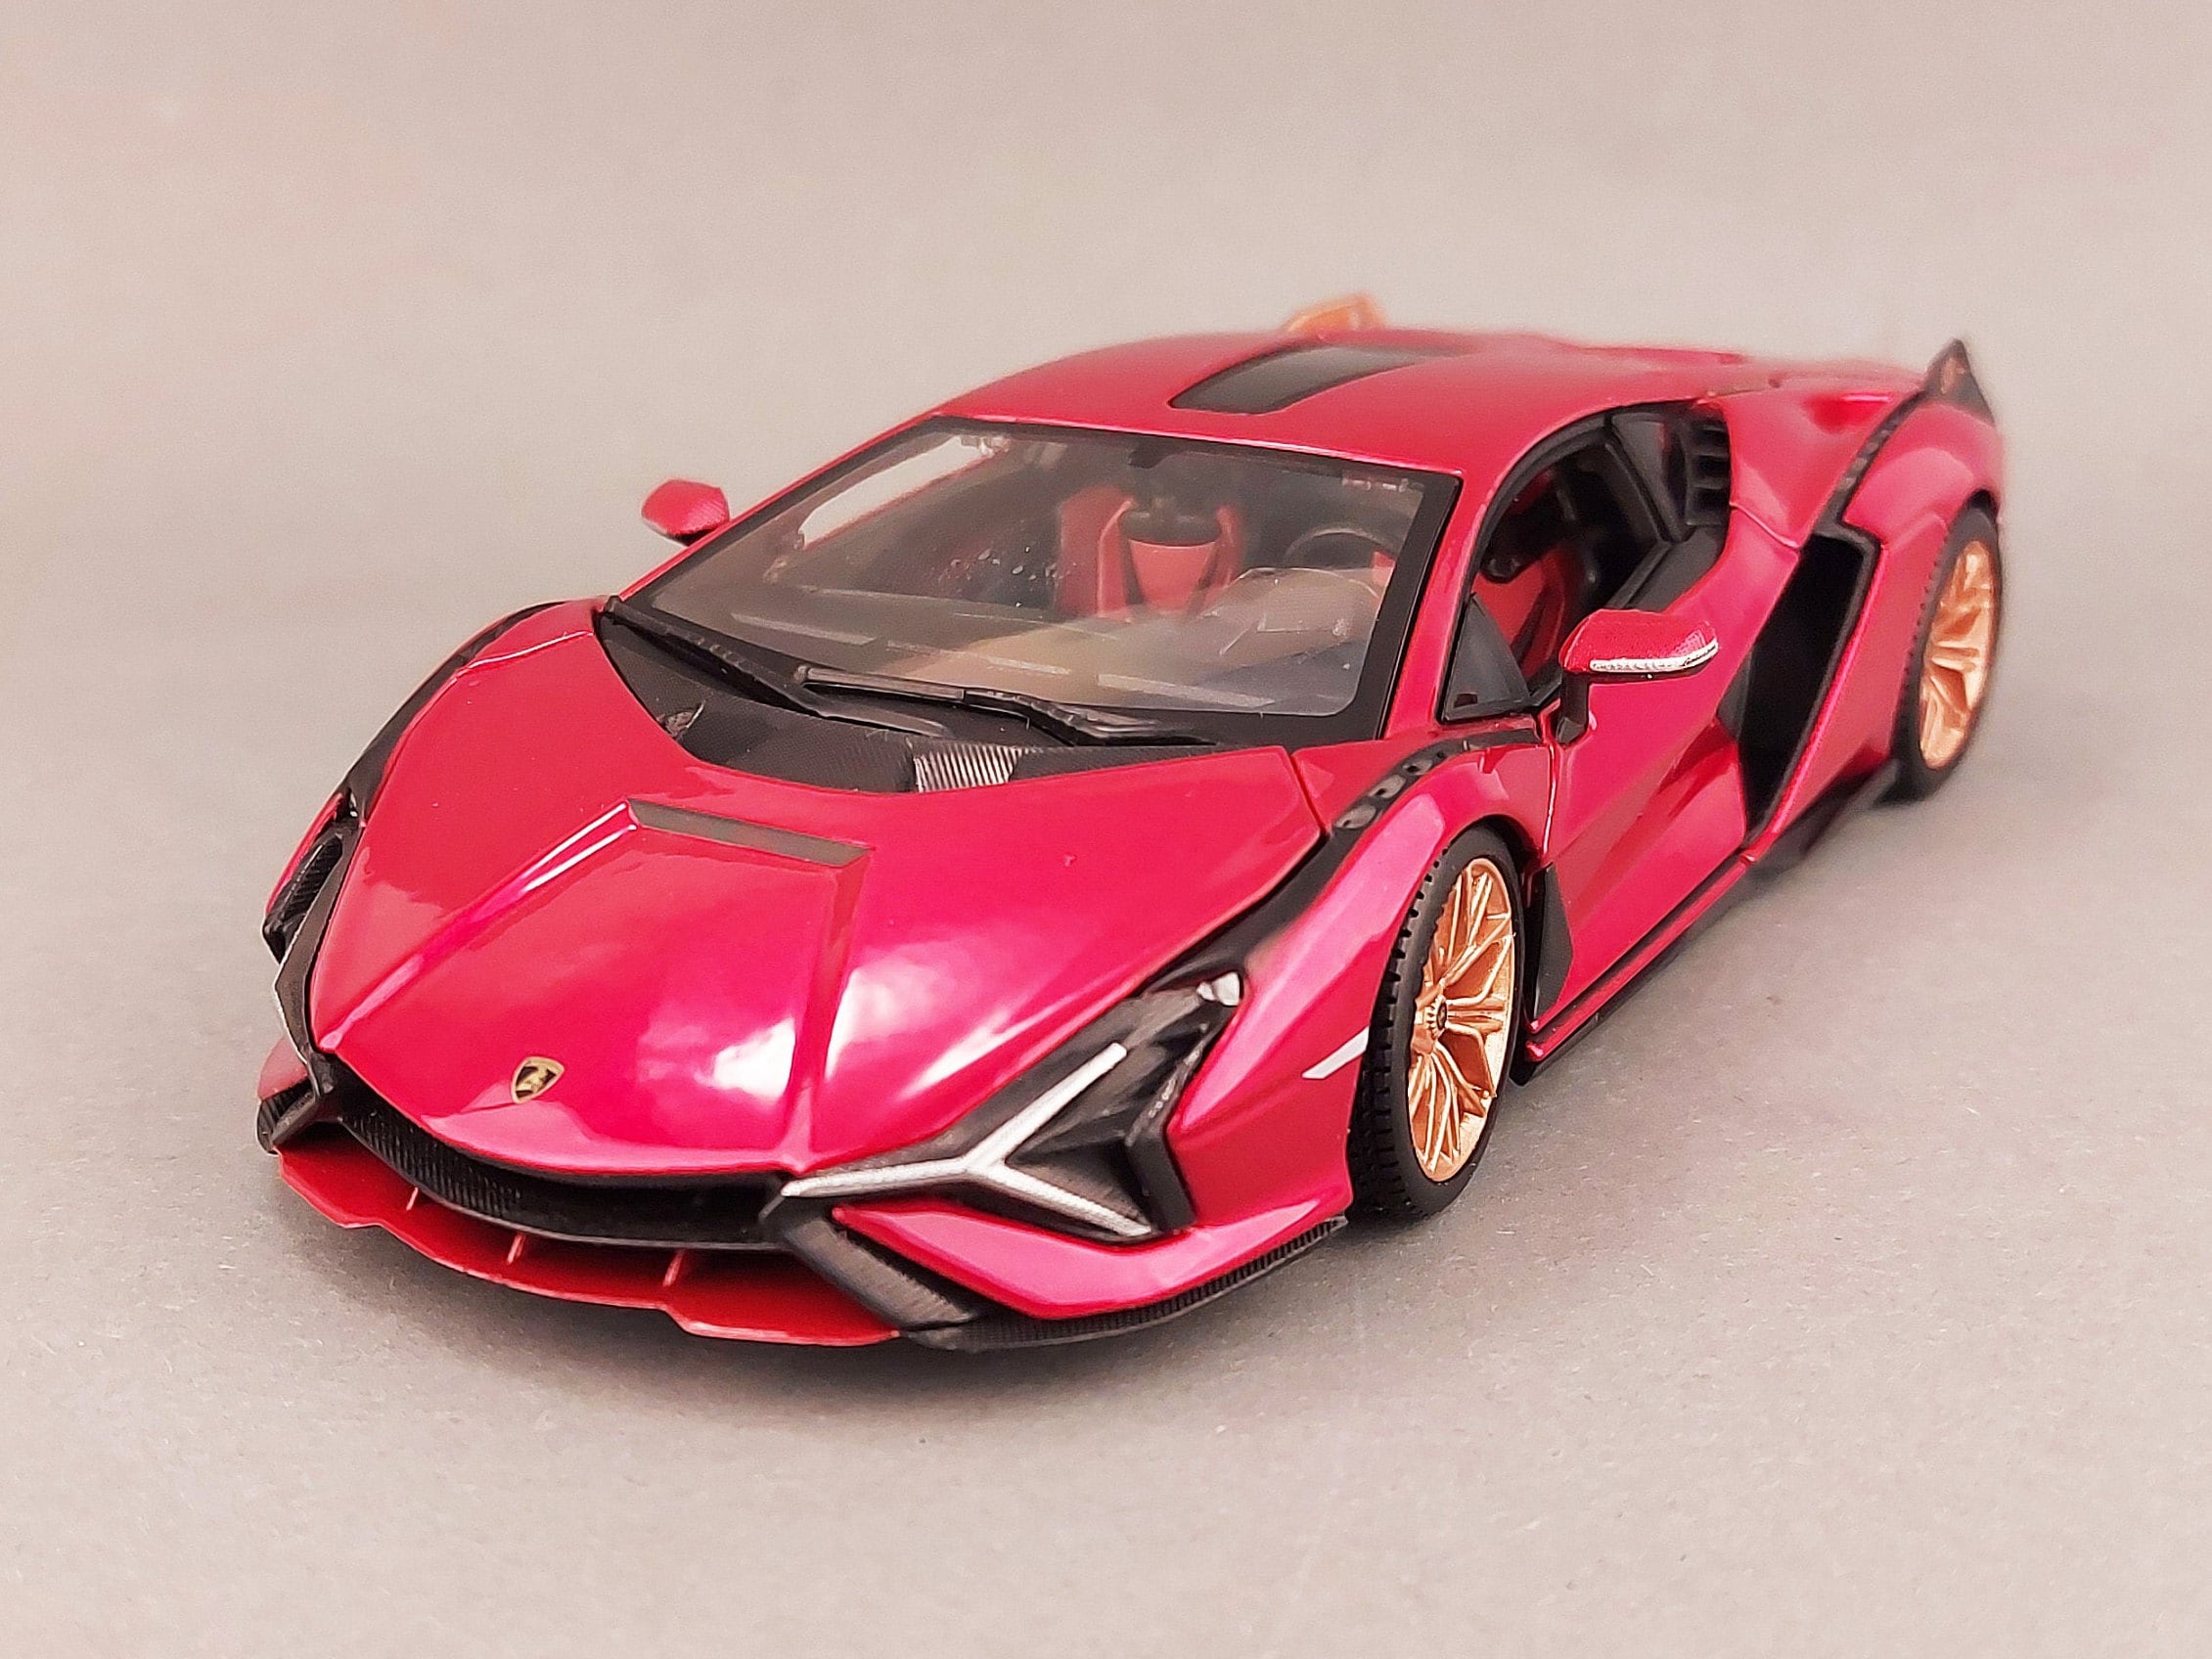 Burago 1:24 Lamborghini Sian FKP 37: Collectible Die Cast Model Car for  Kids & Adults